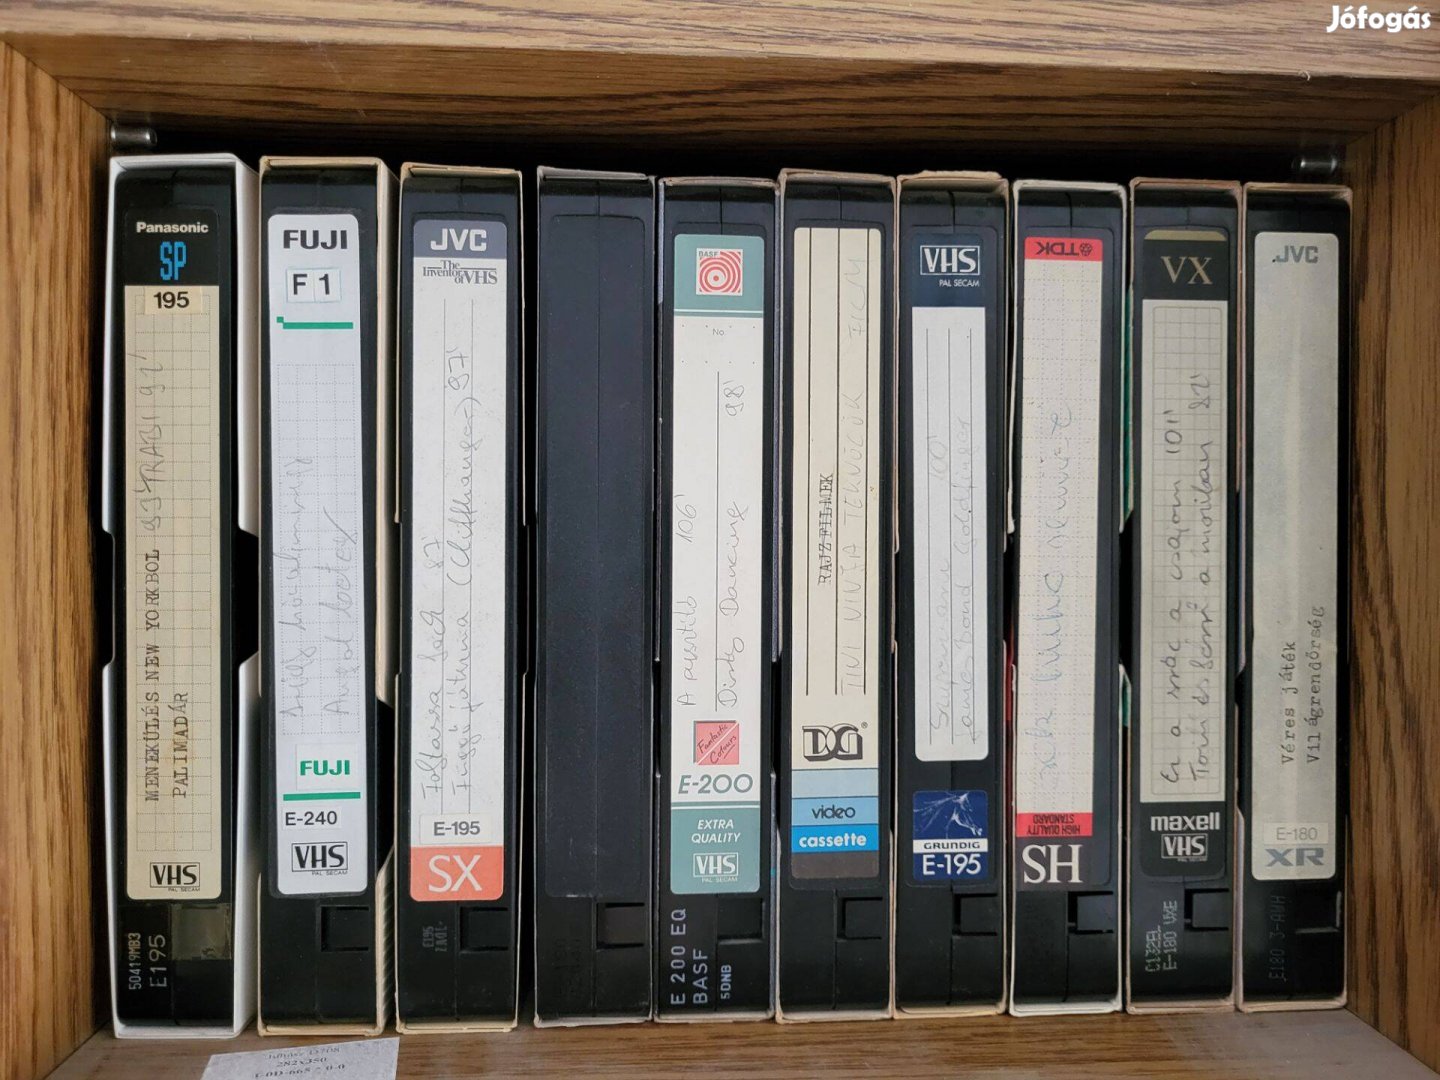 120 db műsoros VHS kazetta